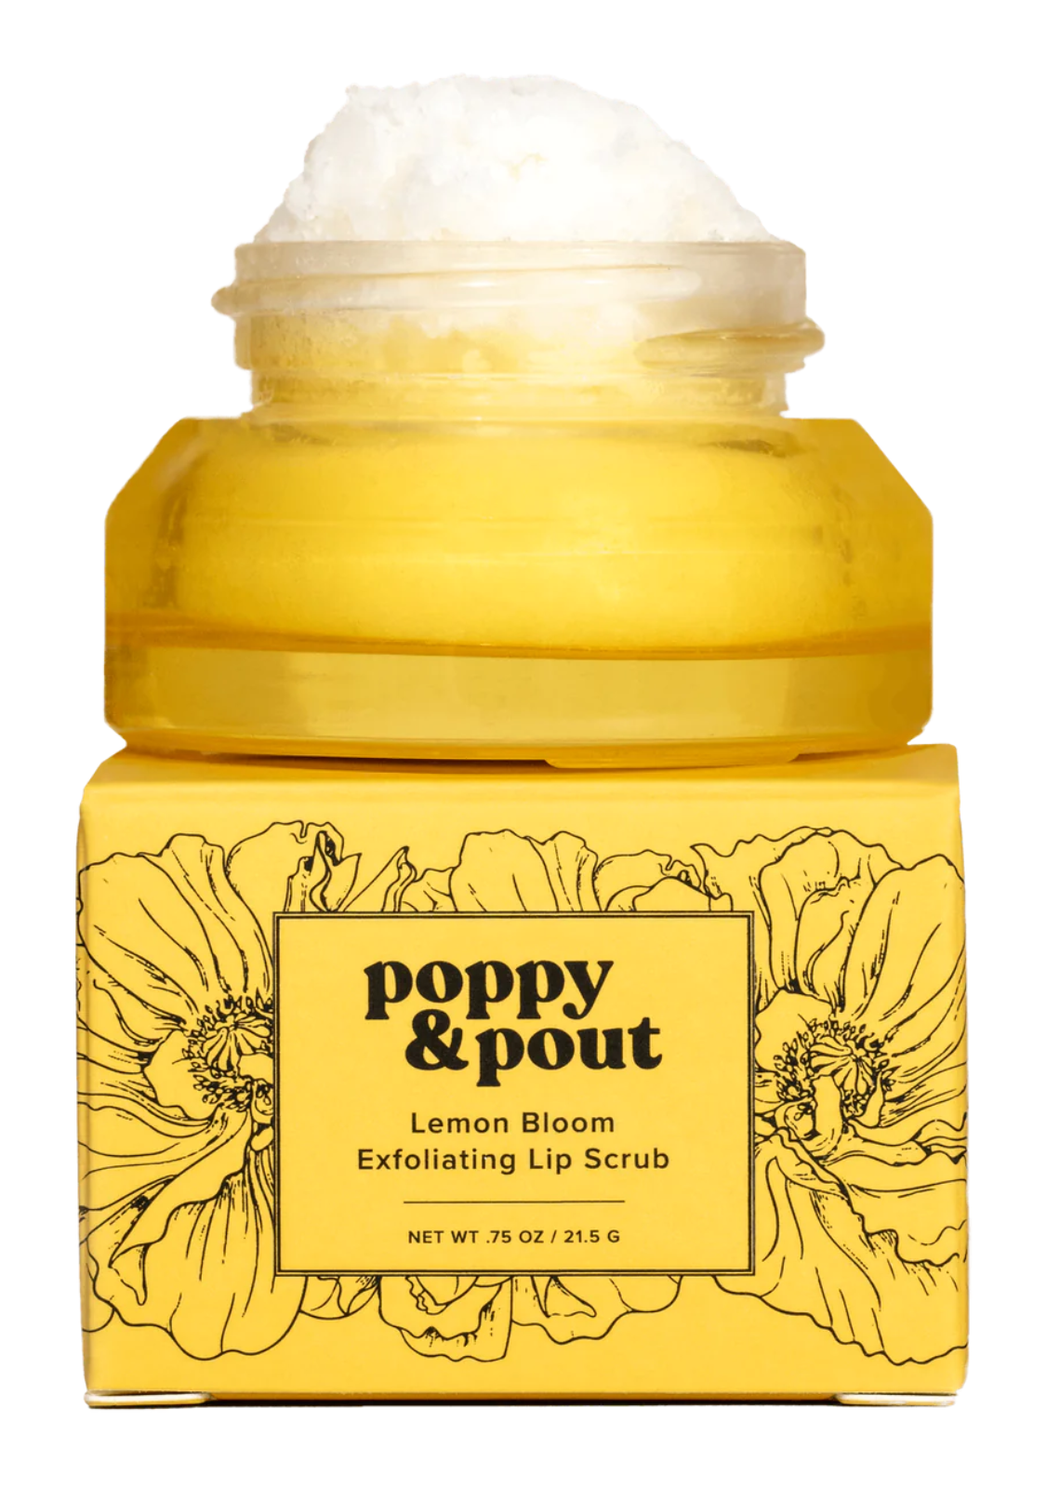 Poppy & Scrub Sugar Lip Scrub, Lemon Bloom